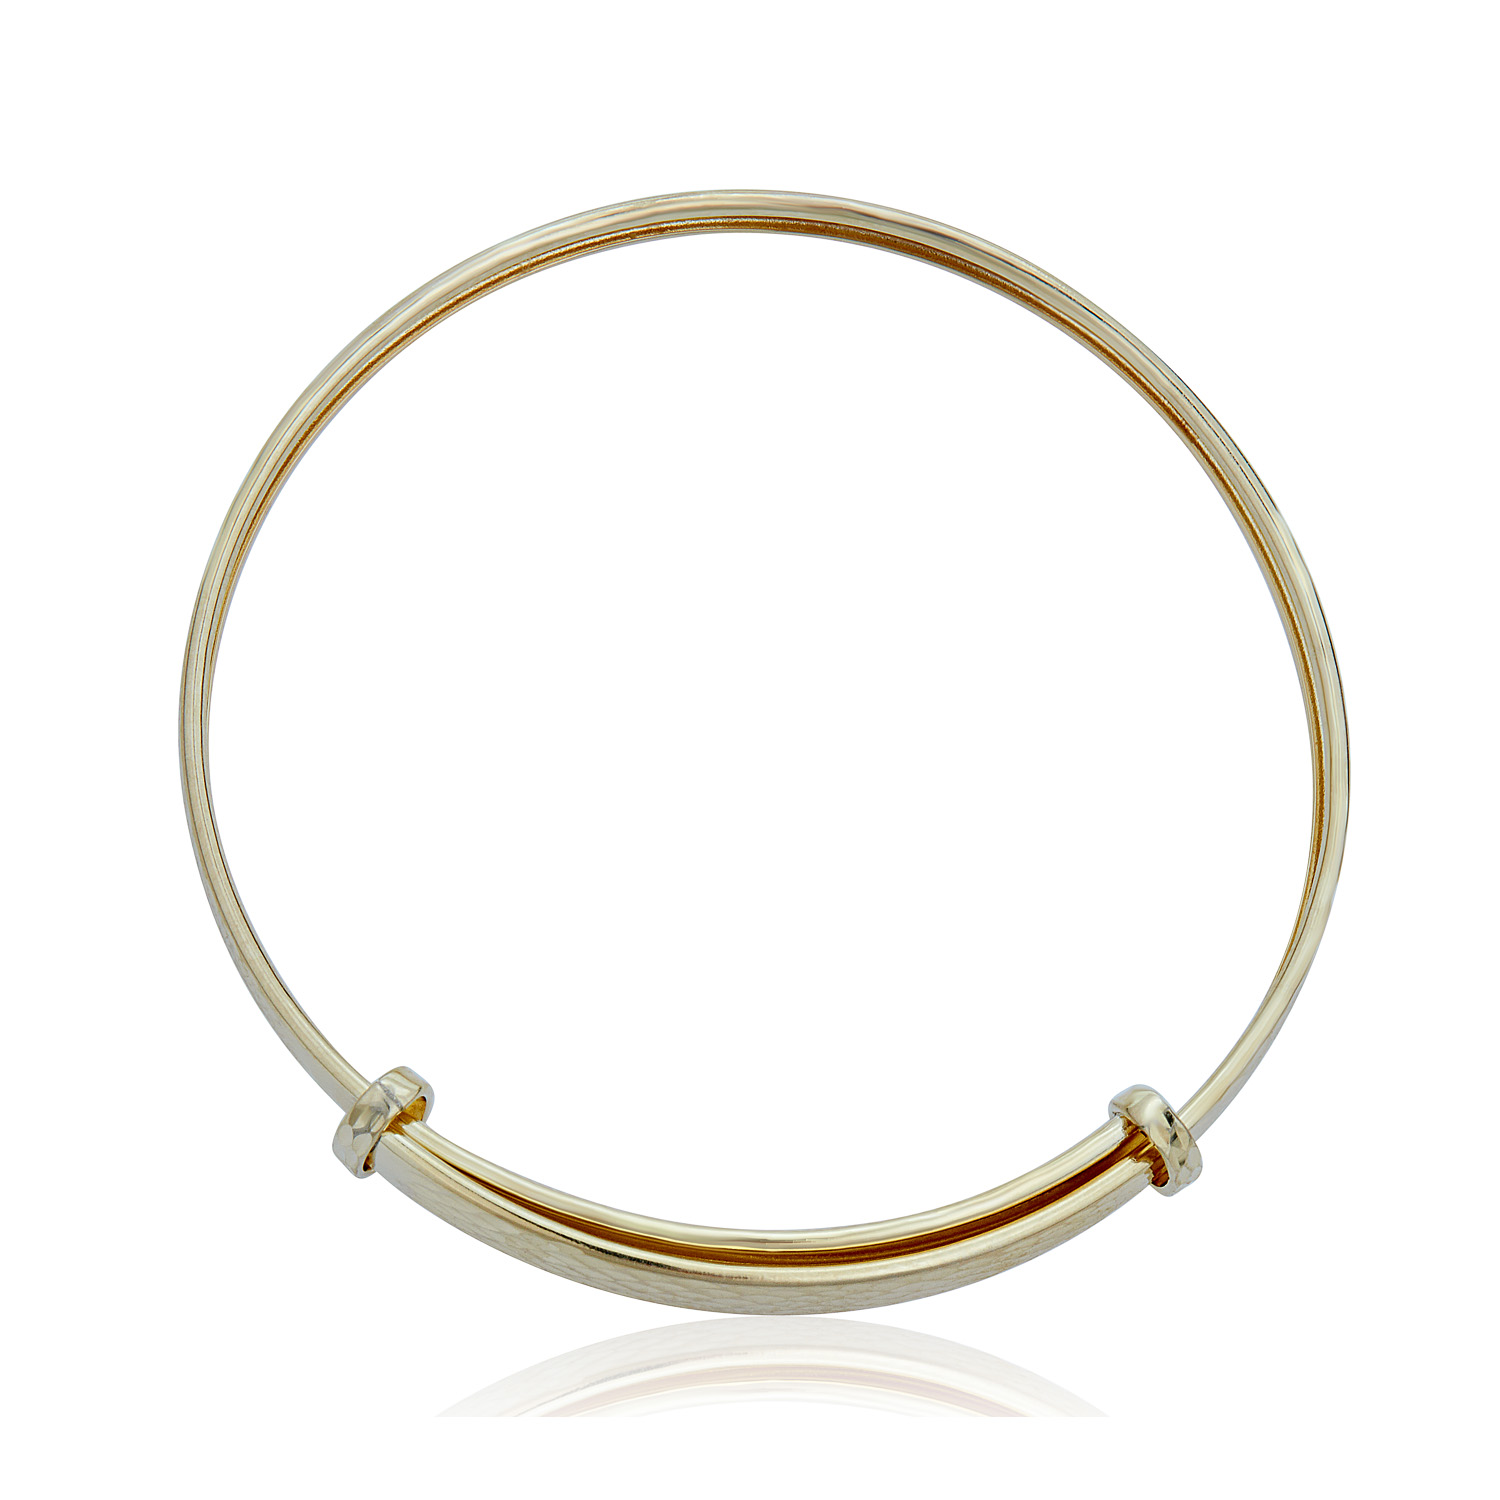 AVORA 10K Yellow Gold Diamond-Cut Adjustable Bangle Bracelet : 1.5" - 2" Diameter